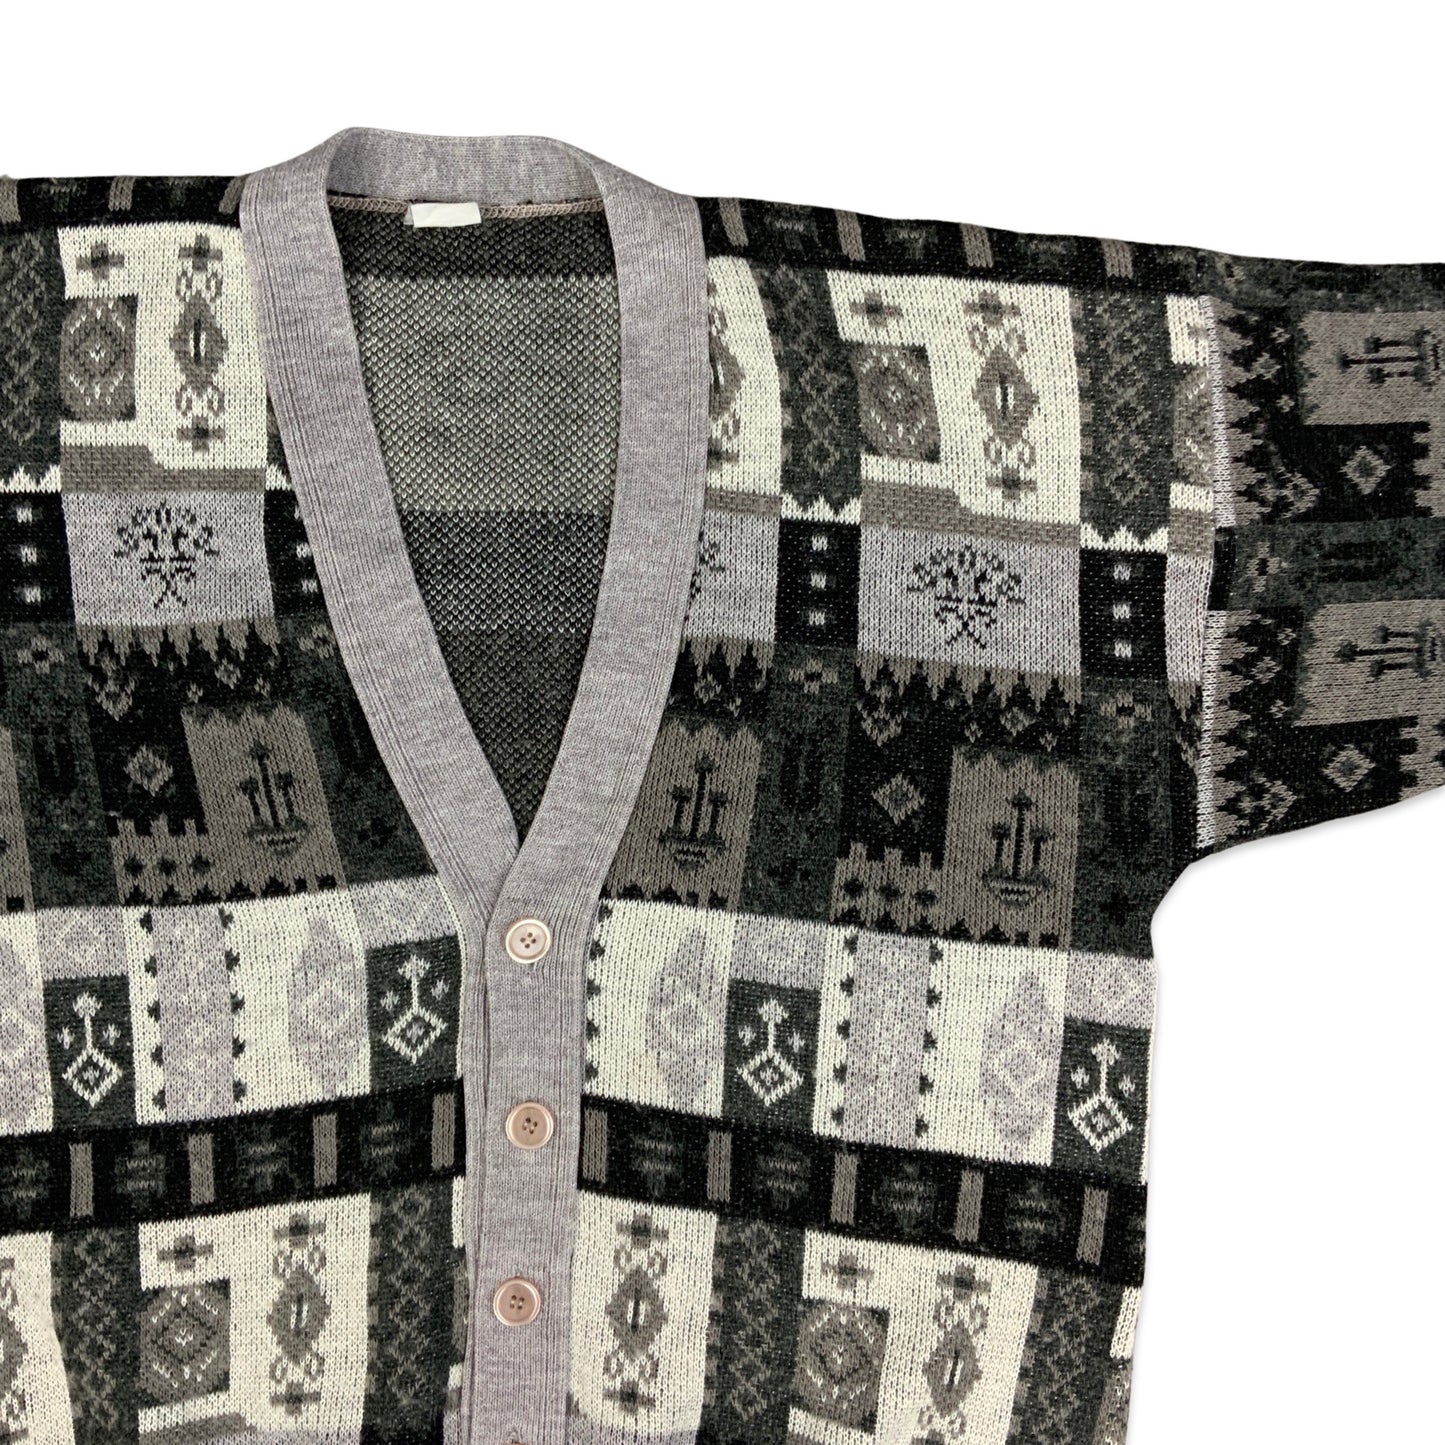 Vintage 80s Men's Grey Black & Brown Knit Cardigan M L